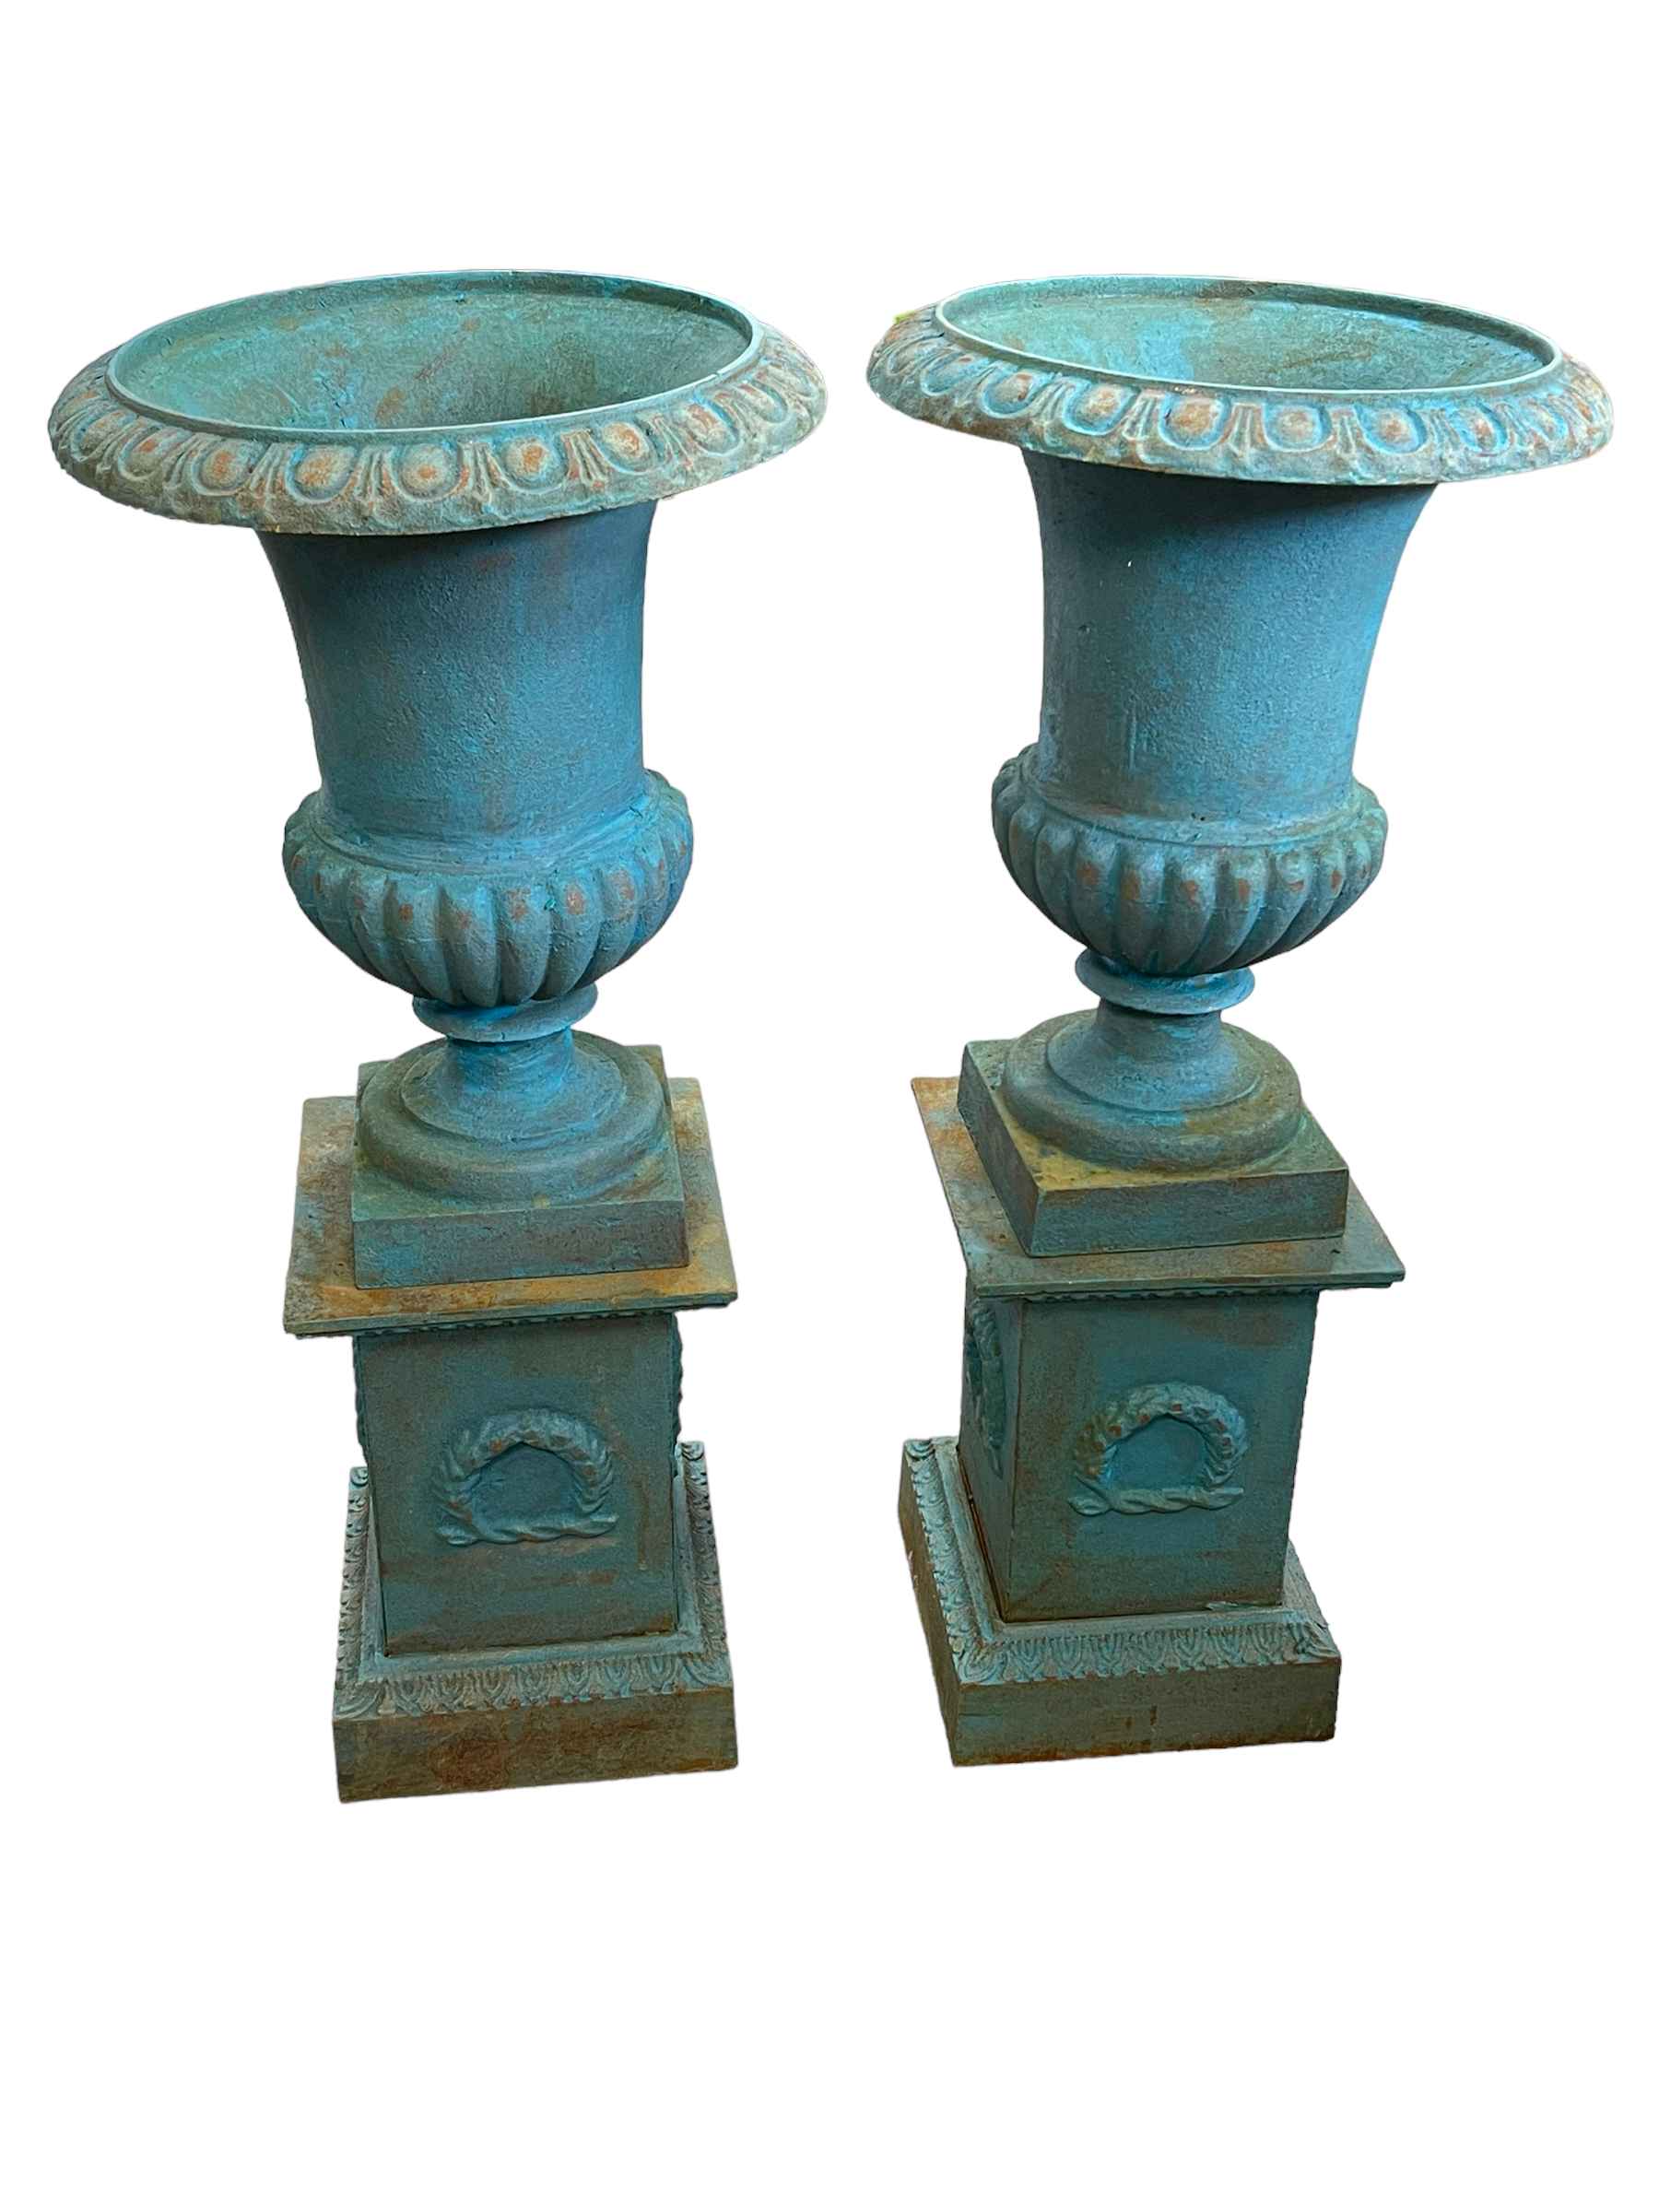 Pair cast Campana style garden urns on stands, 75cm by 34cm diameter.